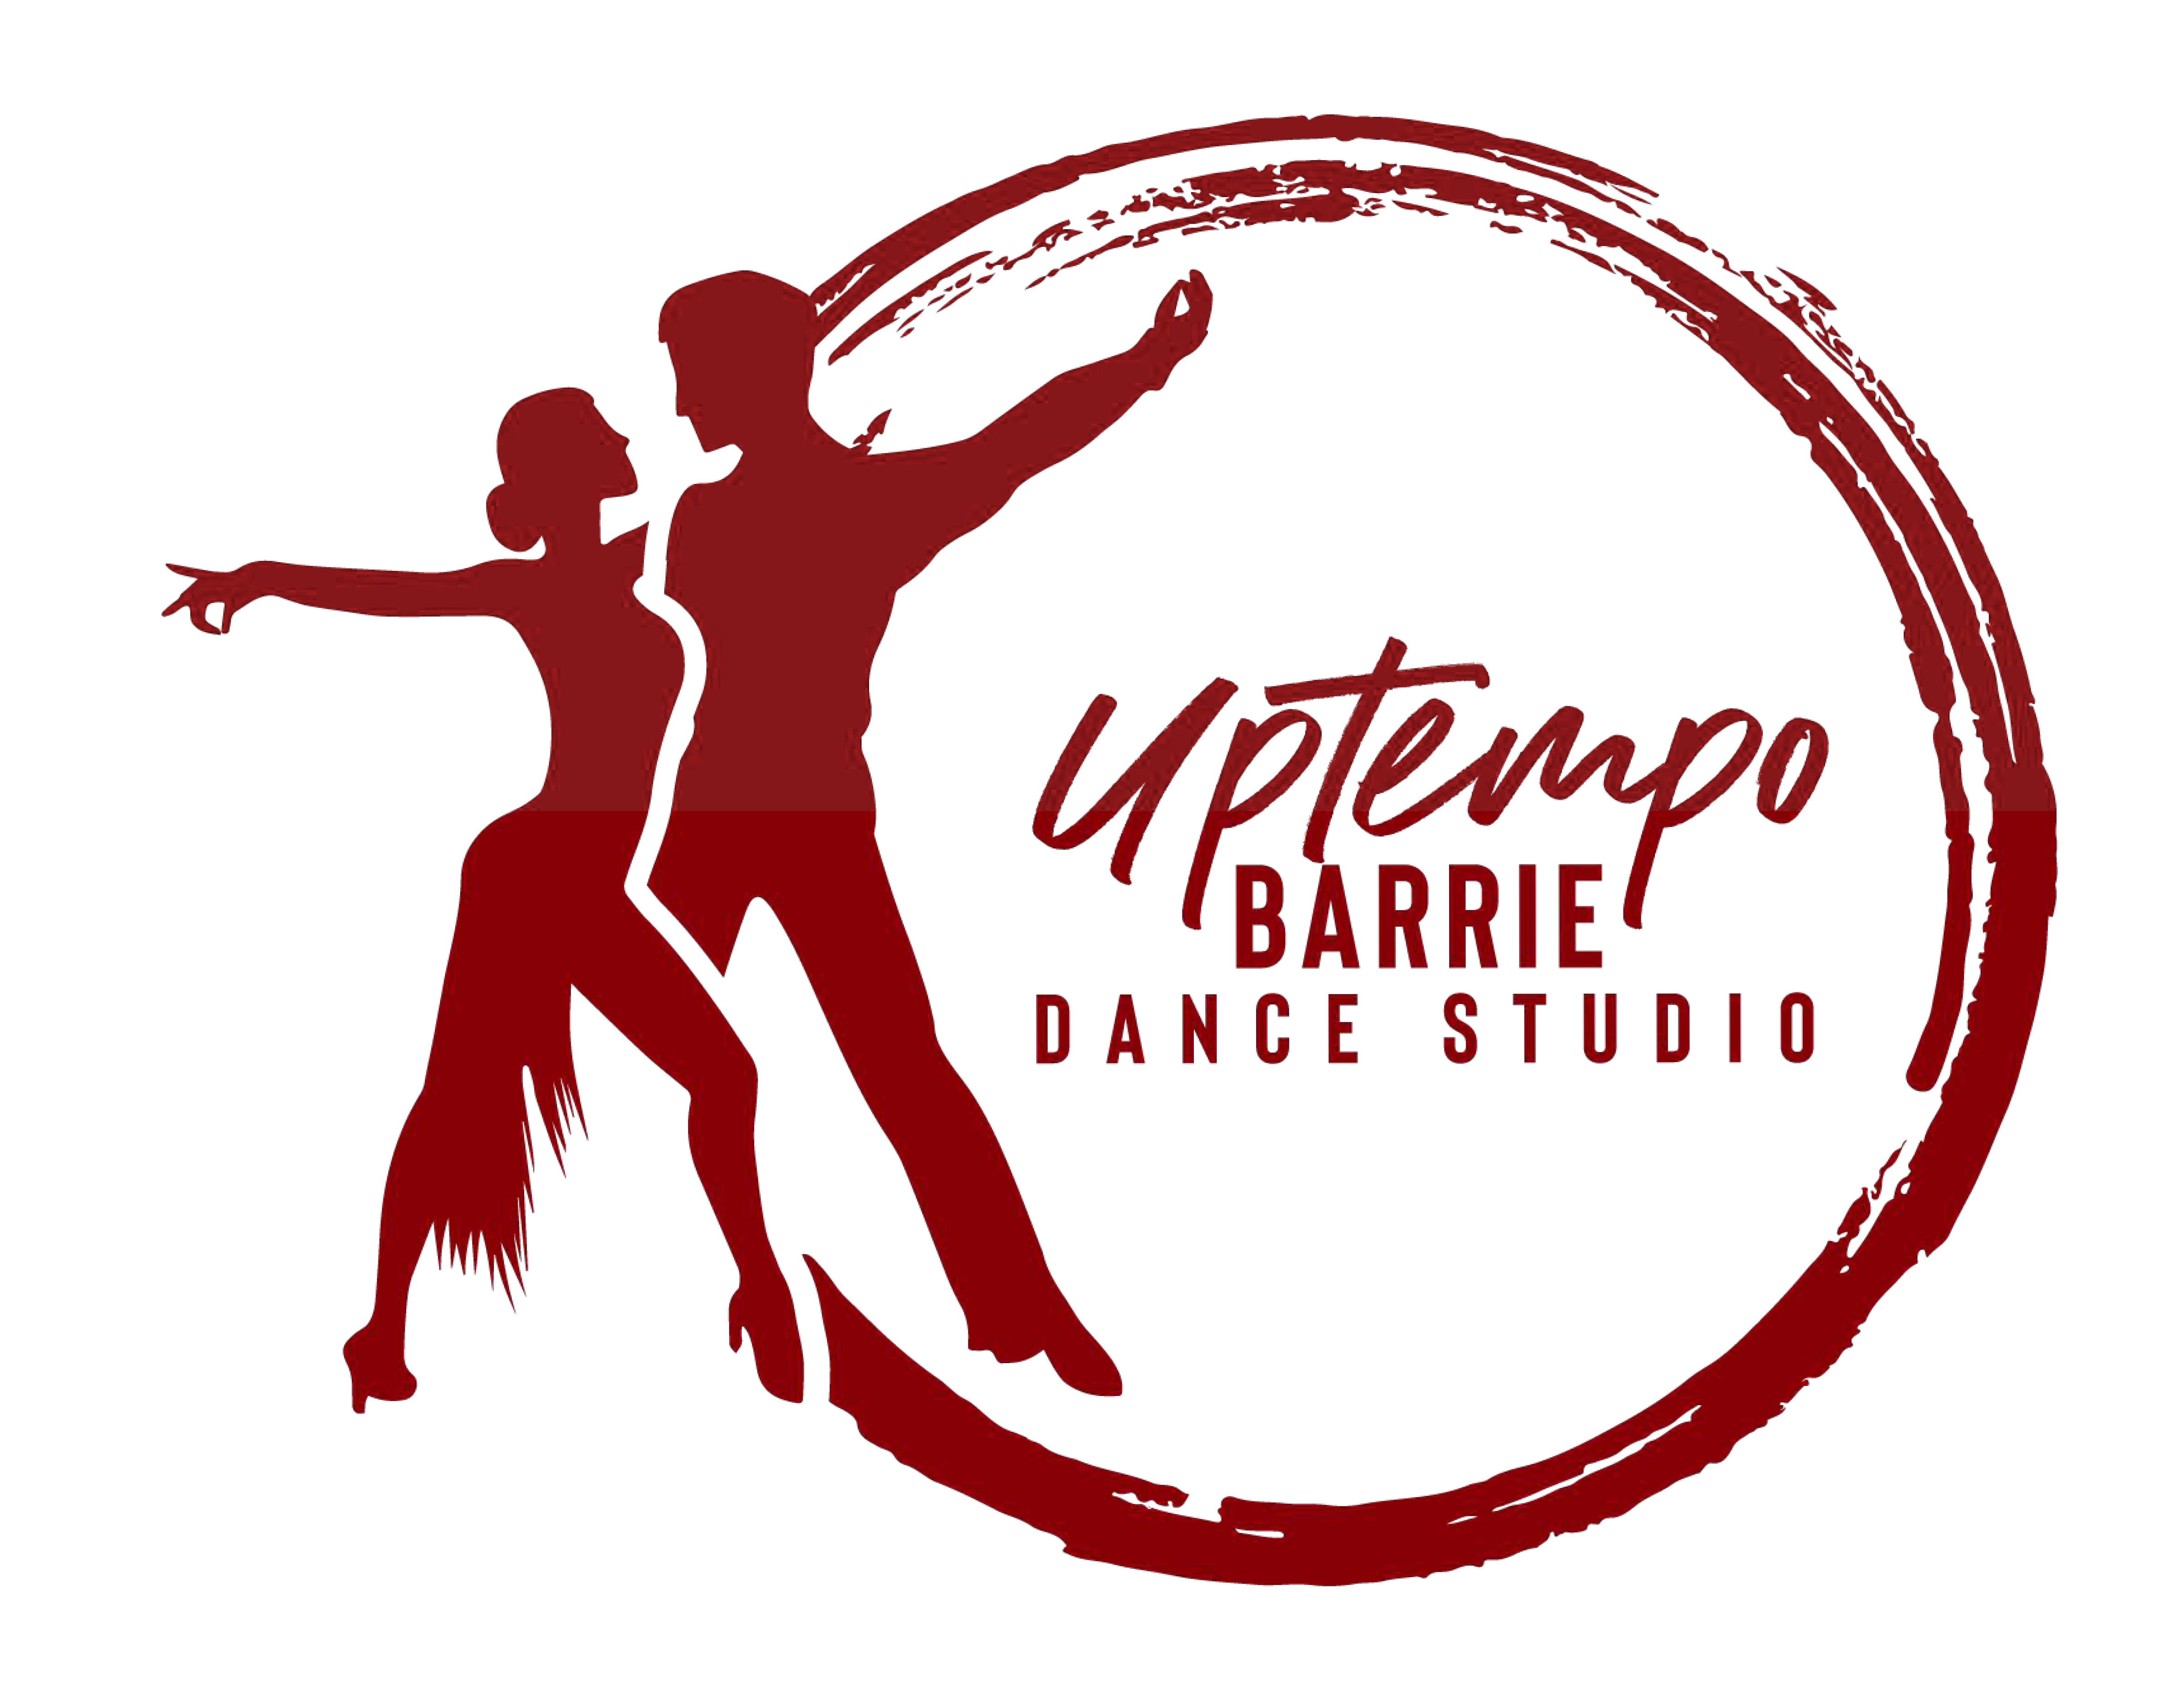 Uptempo Barrie dance studio